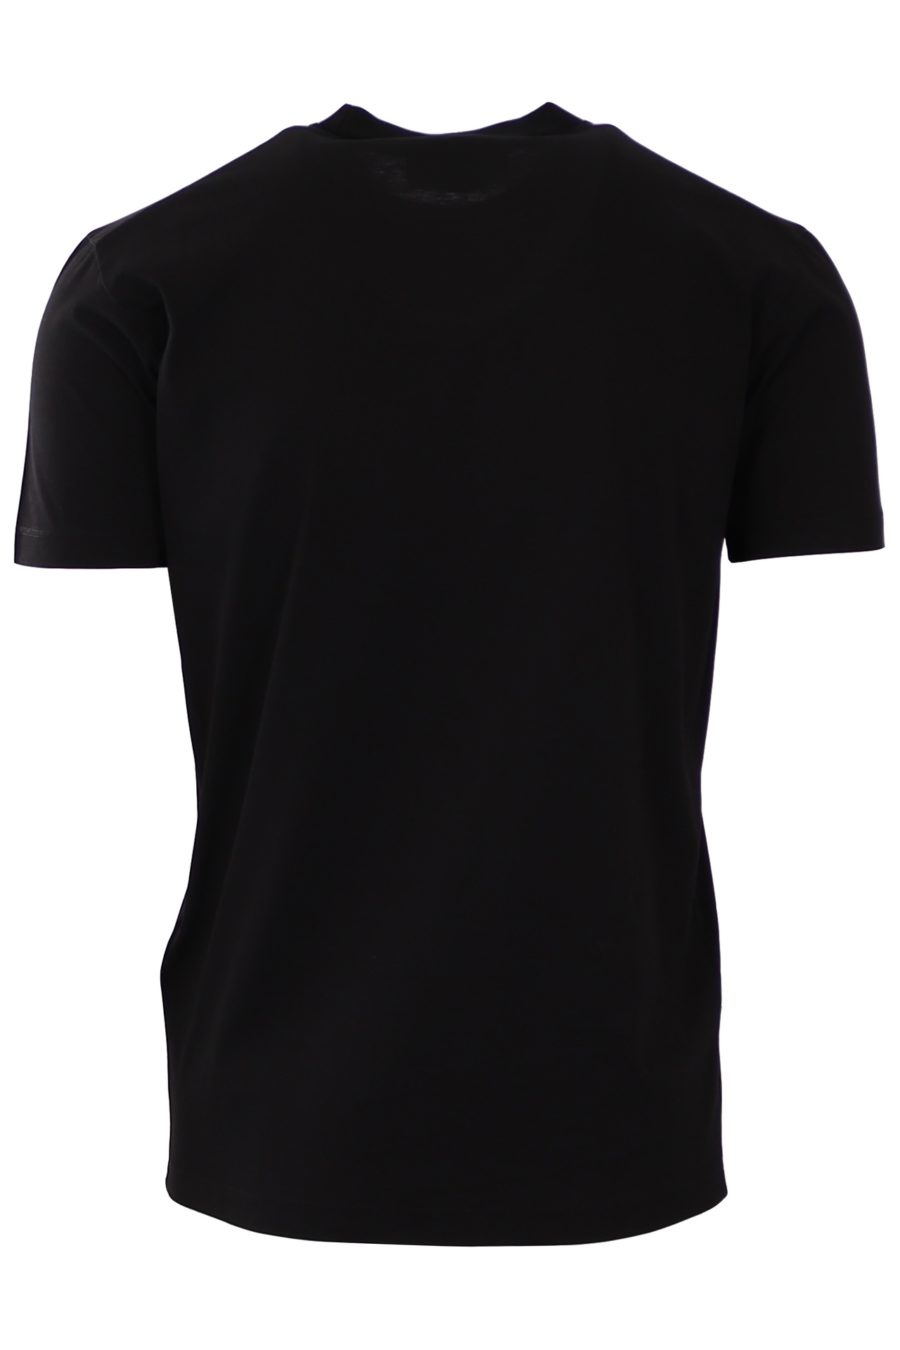 T-shirt Dsquared2 noir logo blanc made in italy - 9d1348fa2025500e50d541ad8989c1a9145b8d92